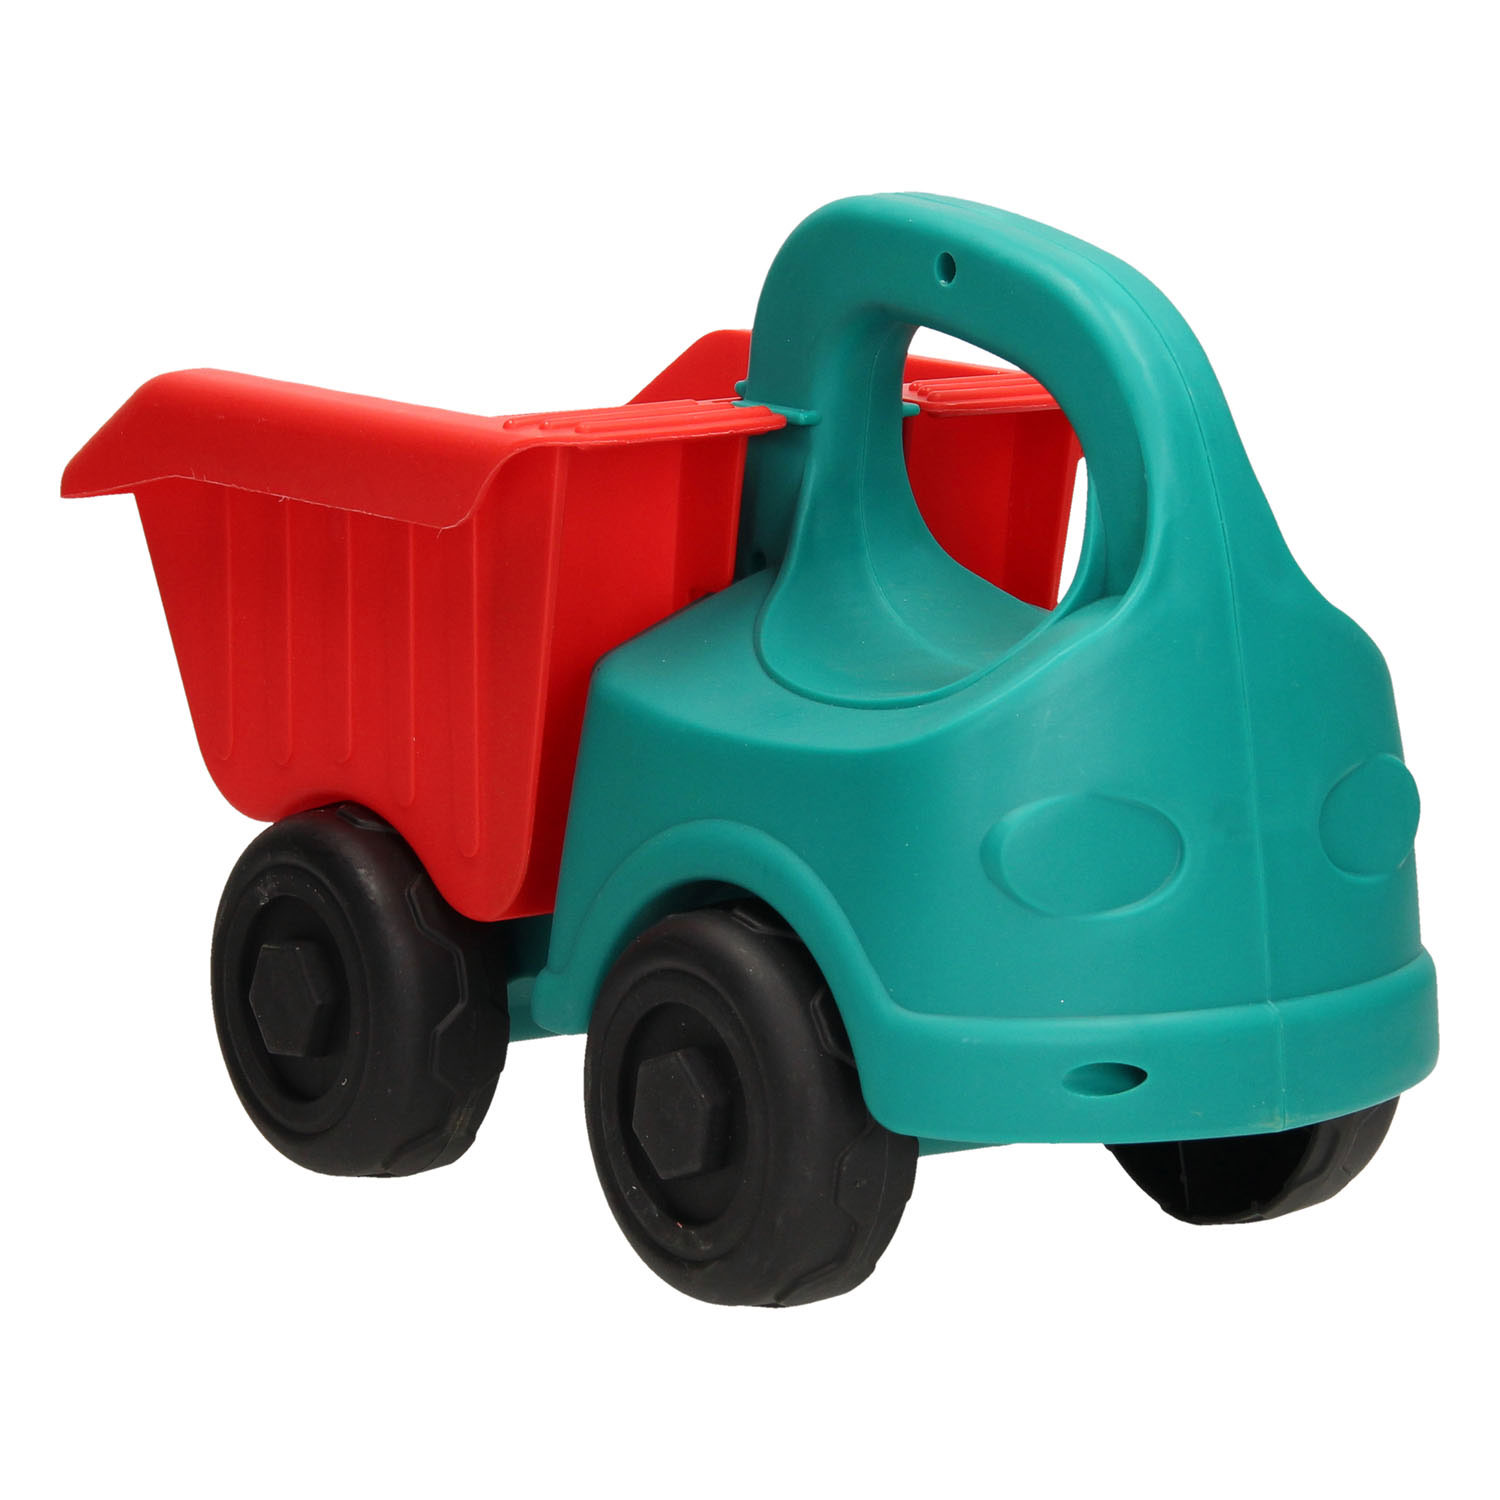 Product enthousiast Formulering Garden Vehicles XL - Dump Truck | Thimble Toys